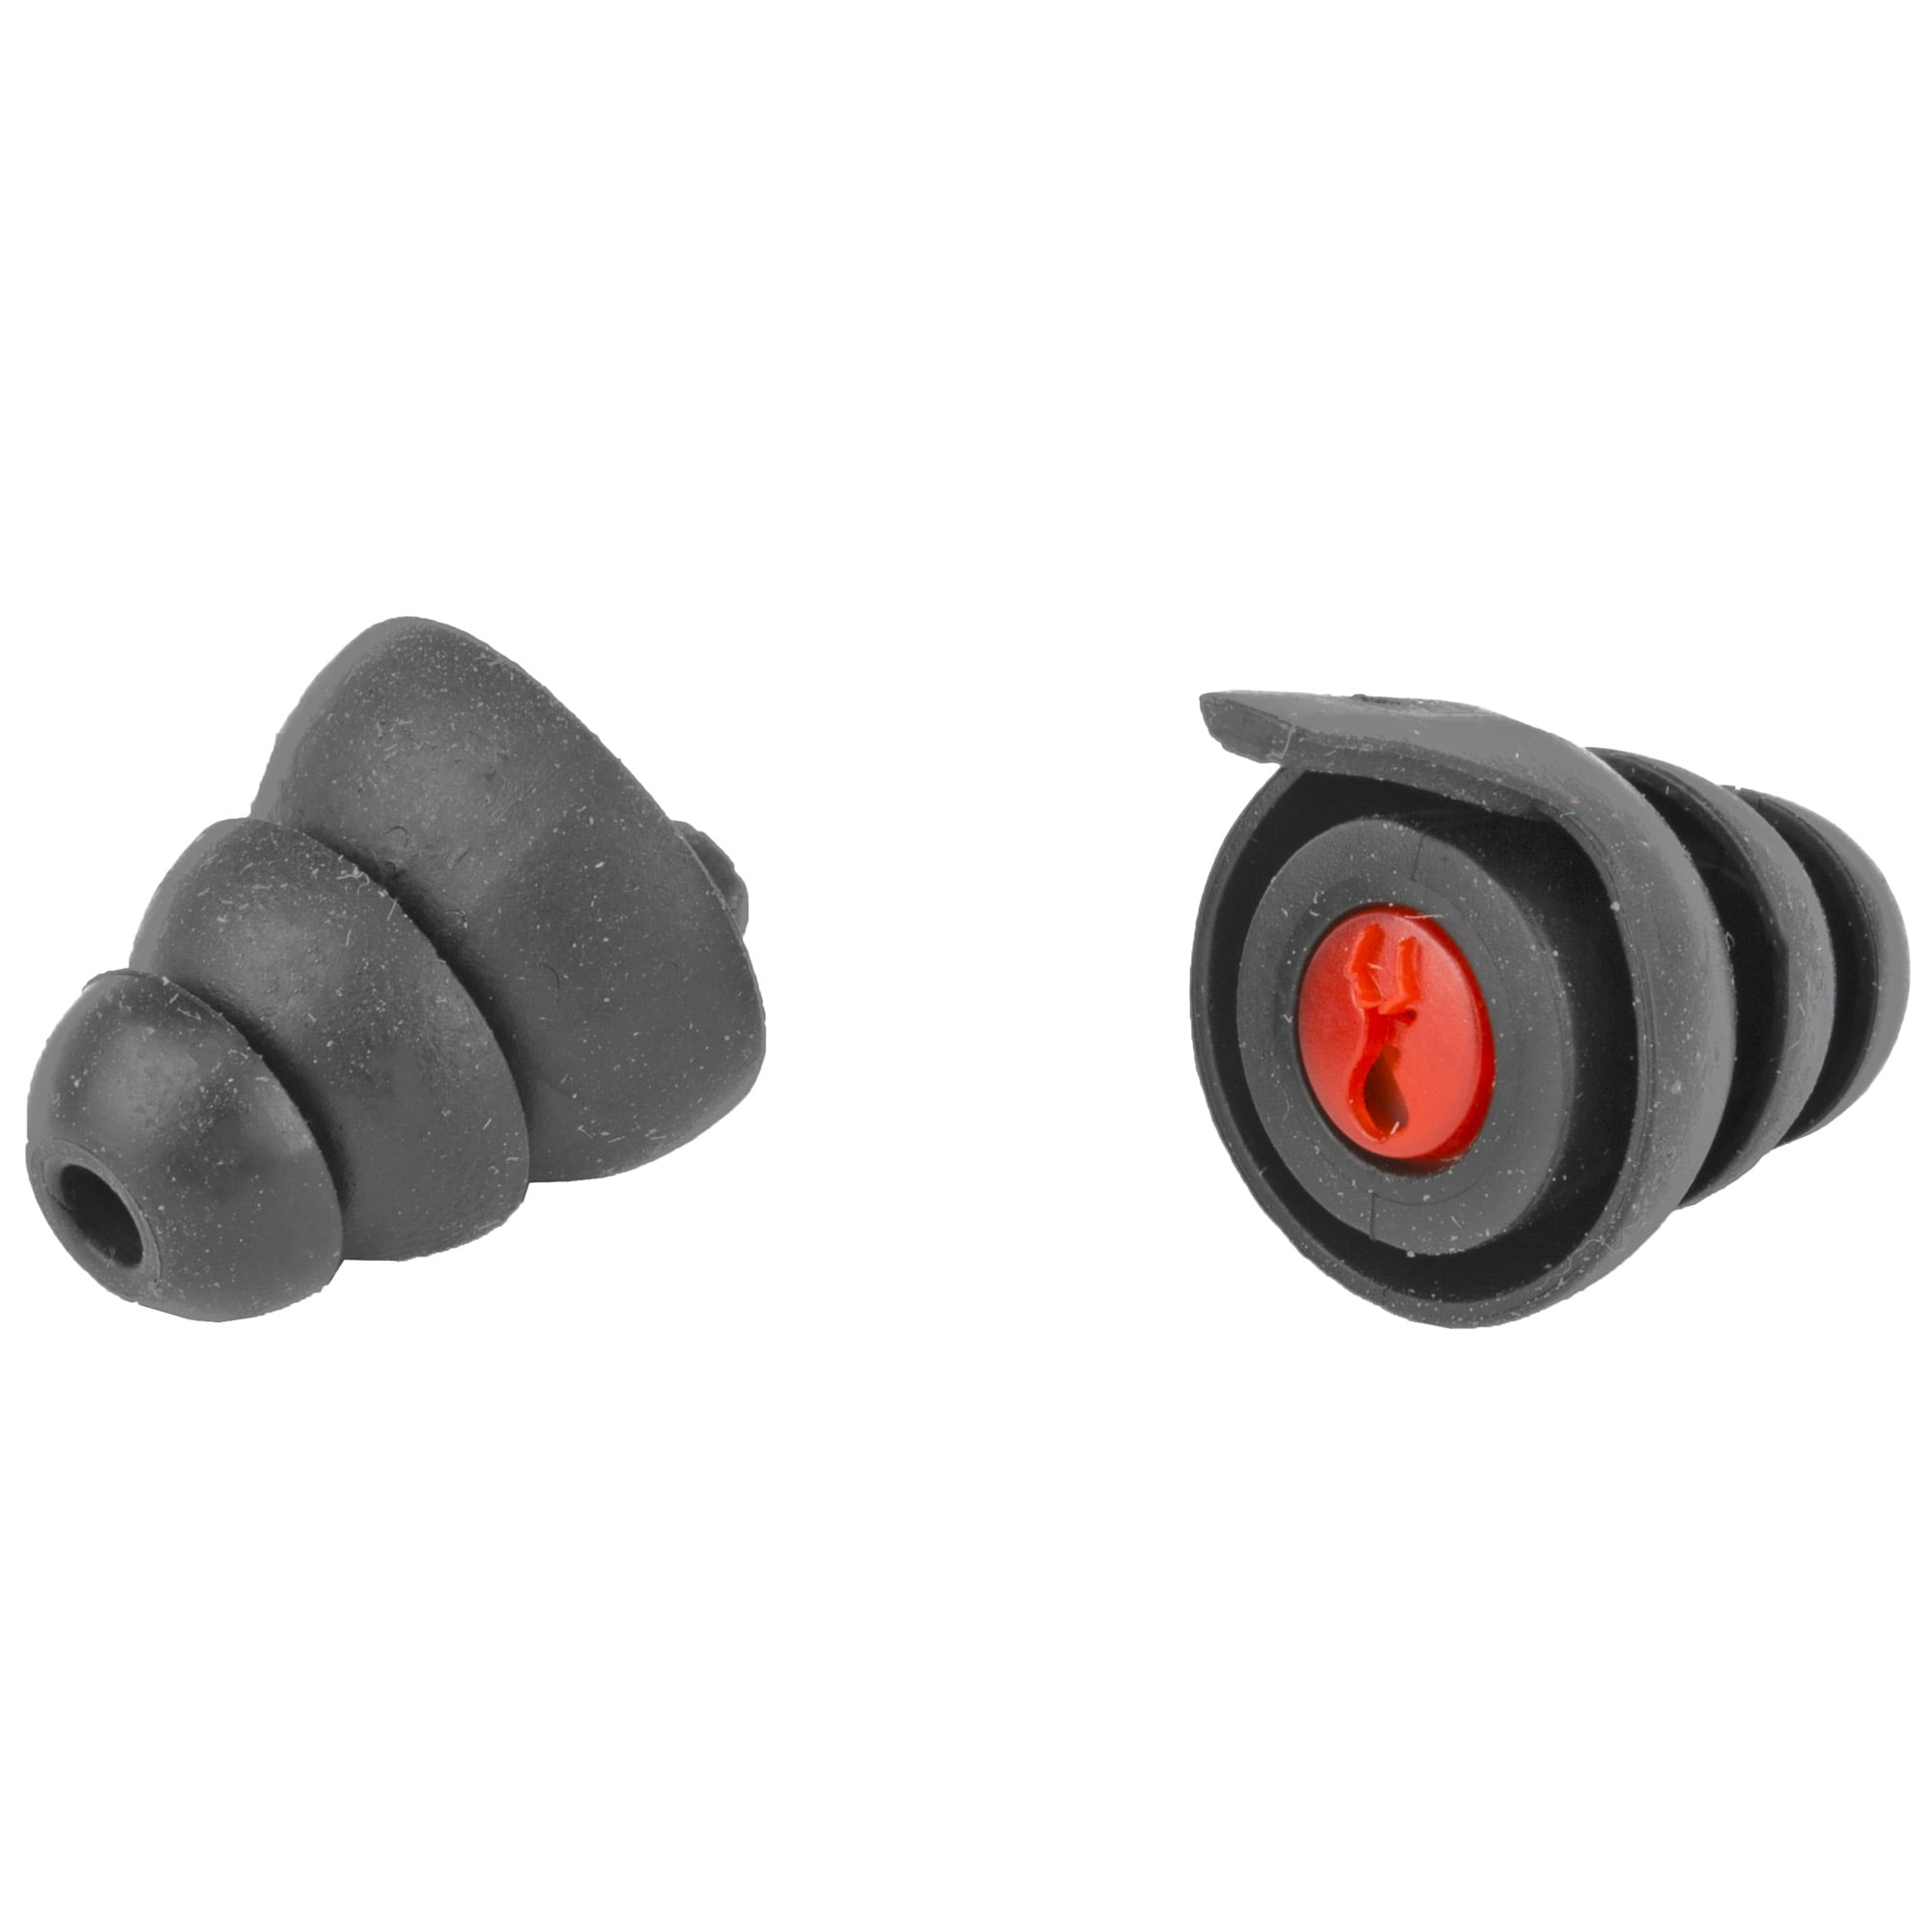 Safariland In-Ear Impulse Hearing Protection Black/Red Medium/Large 